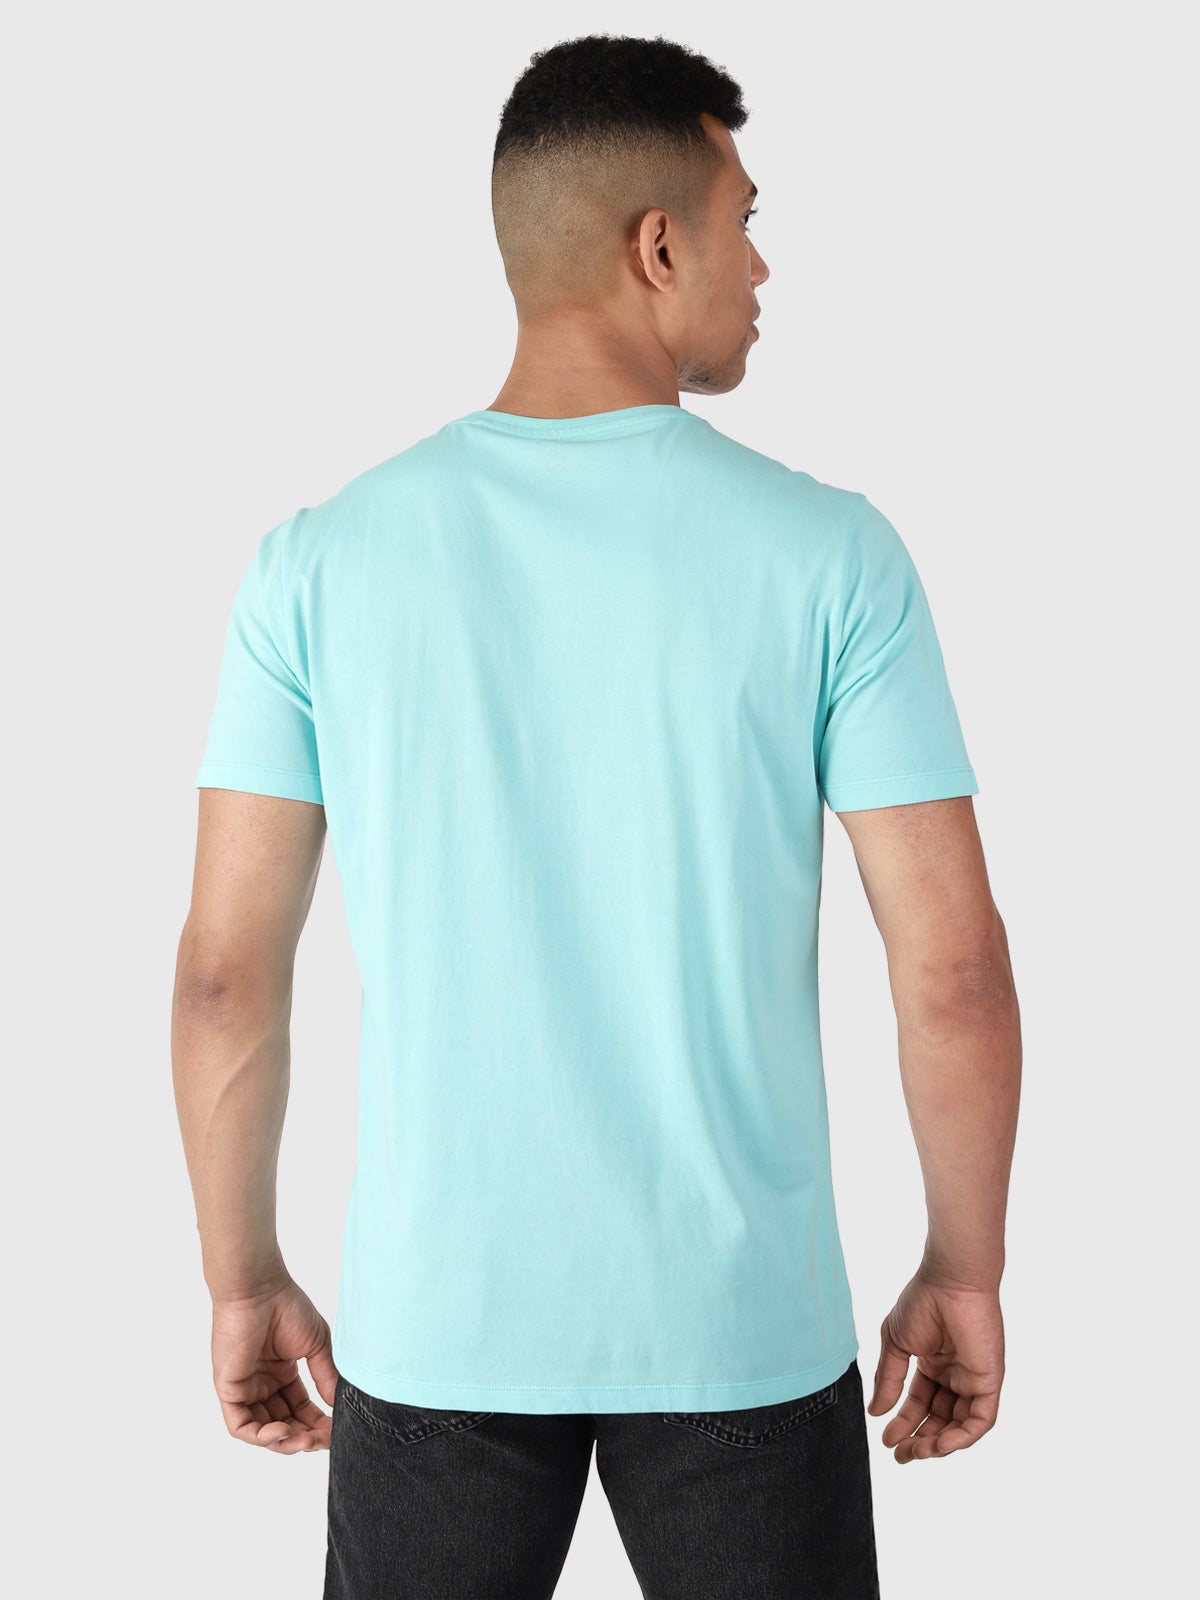 Naval-R Herren T-Shirt | Blau